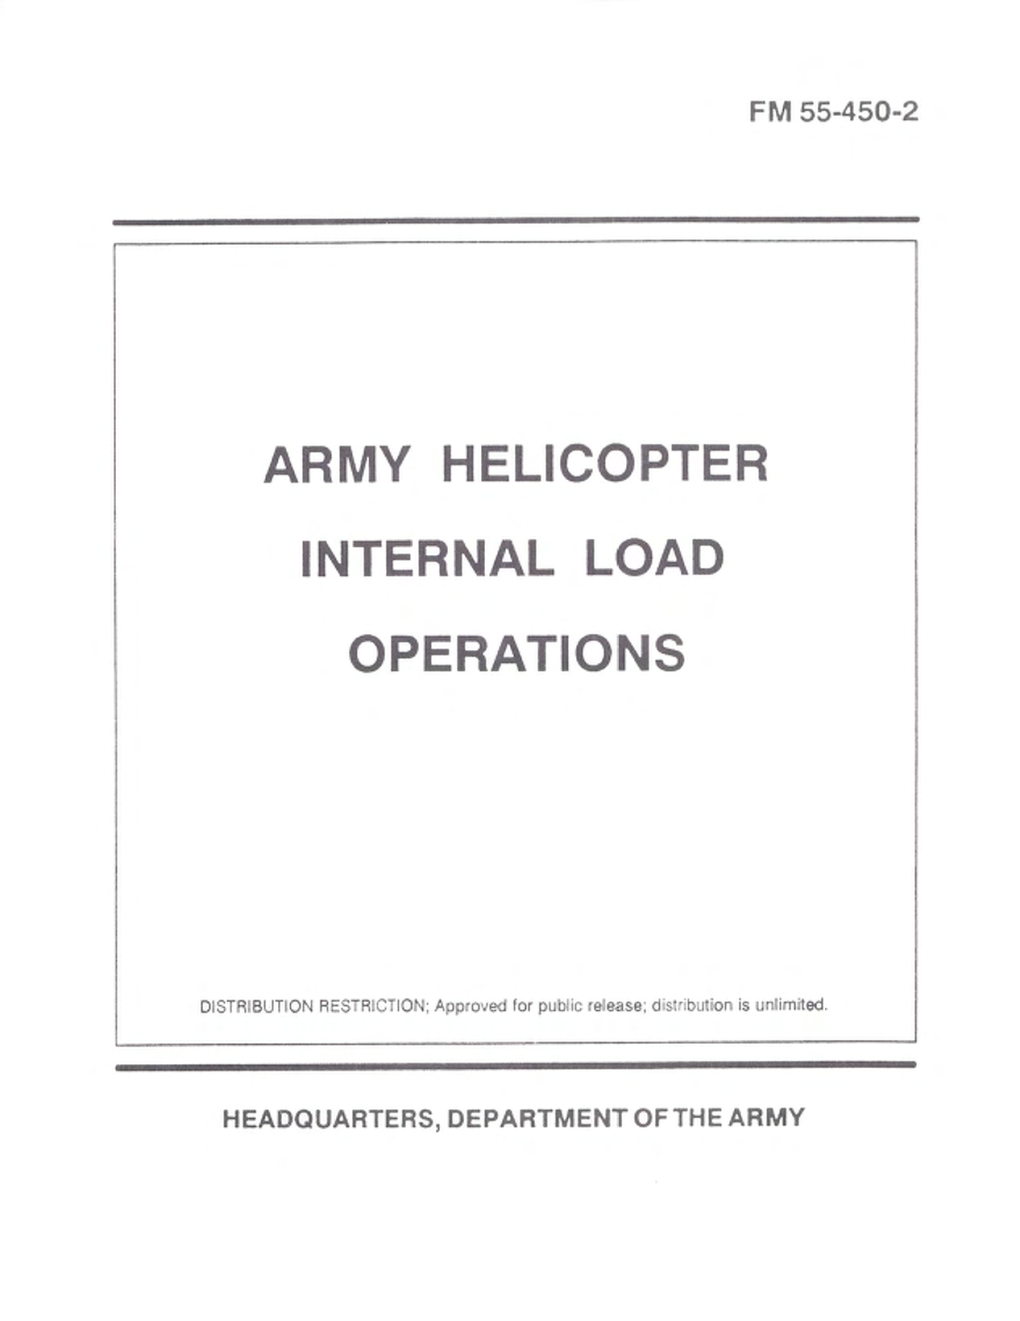 Helicopter Internal Cargo-Handling System (Hichs)